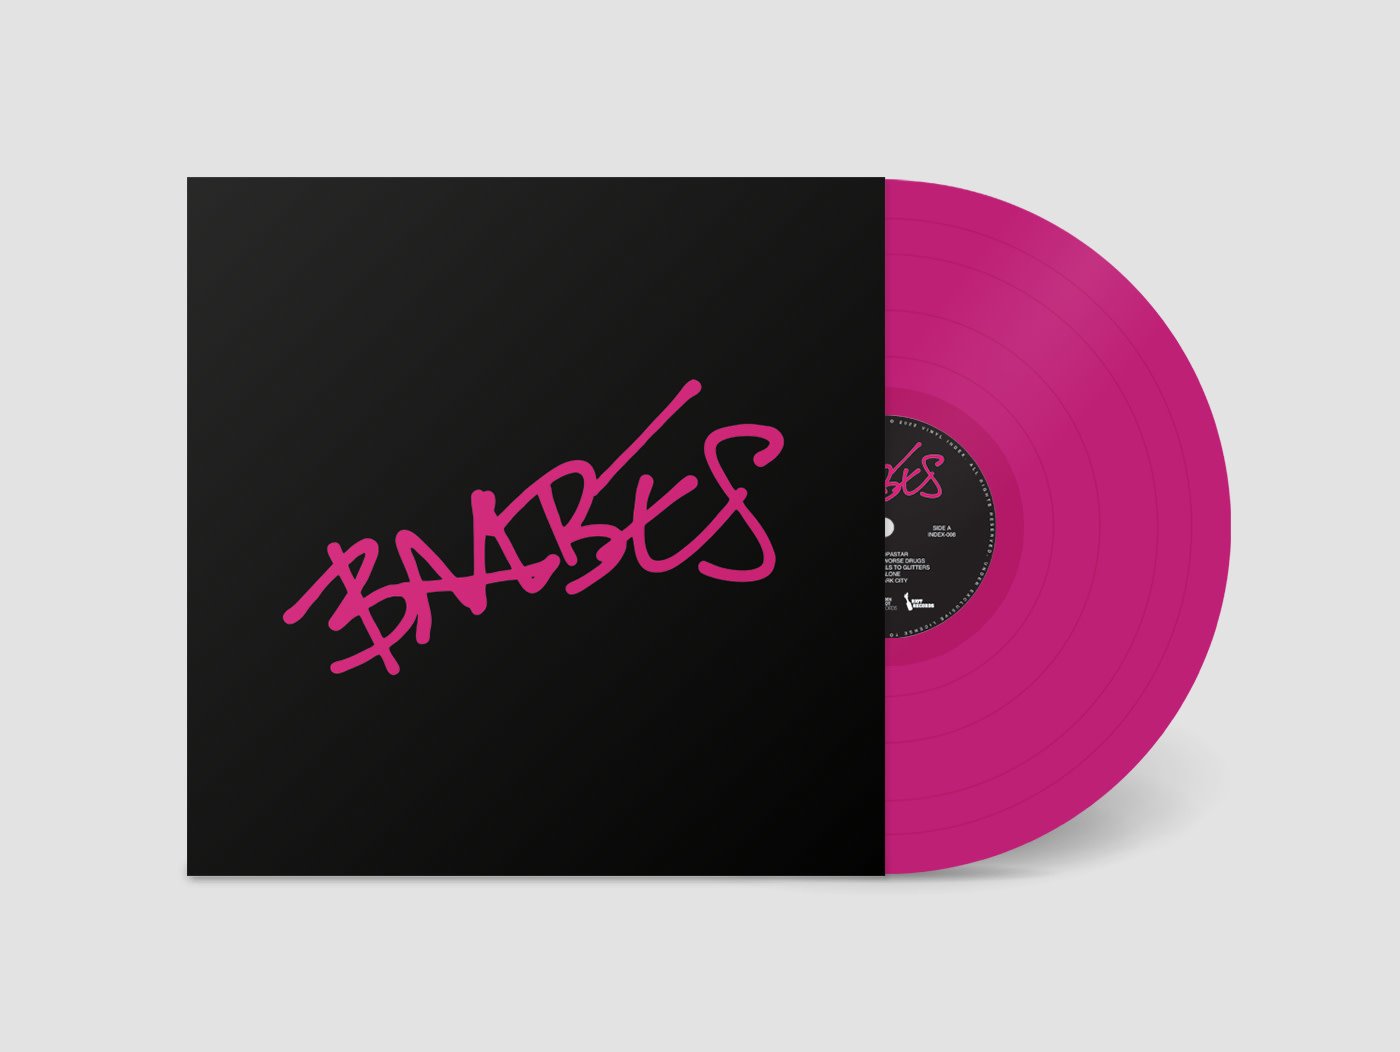 BAABES - BAABES - Vinyl, 12", LP, Limited Edition, Hot Pink